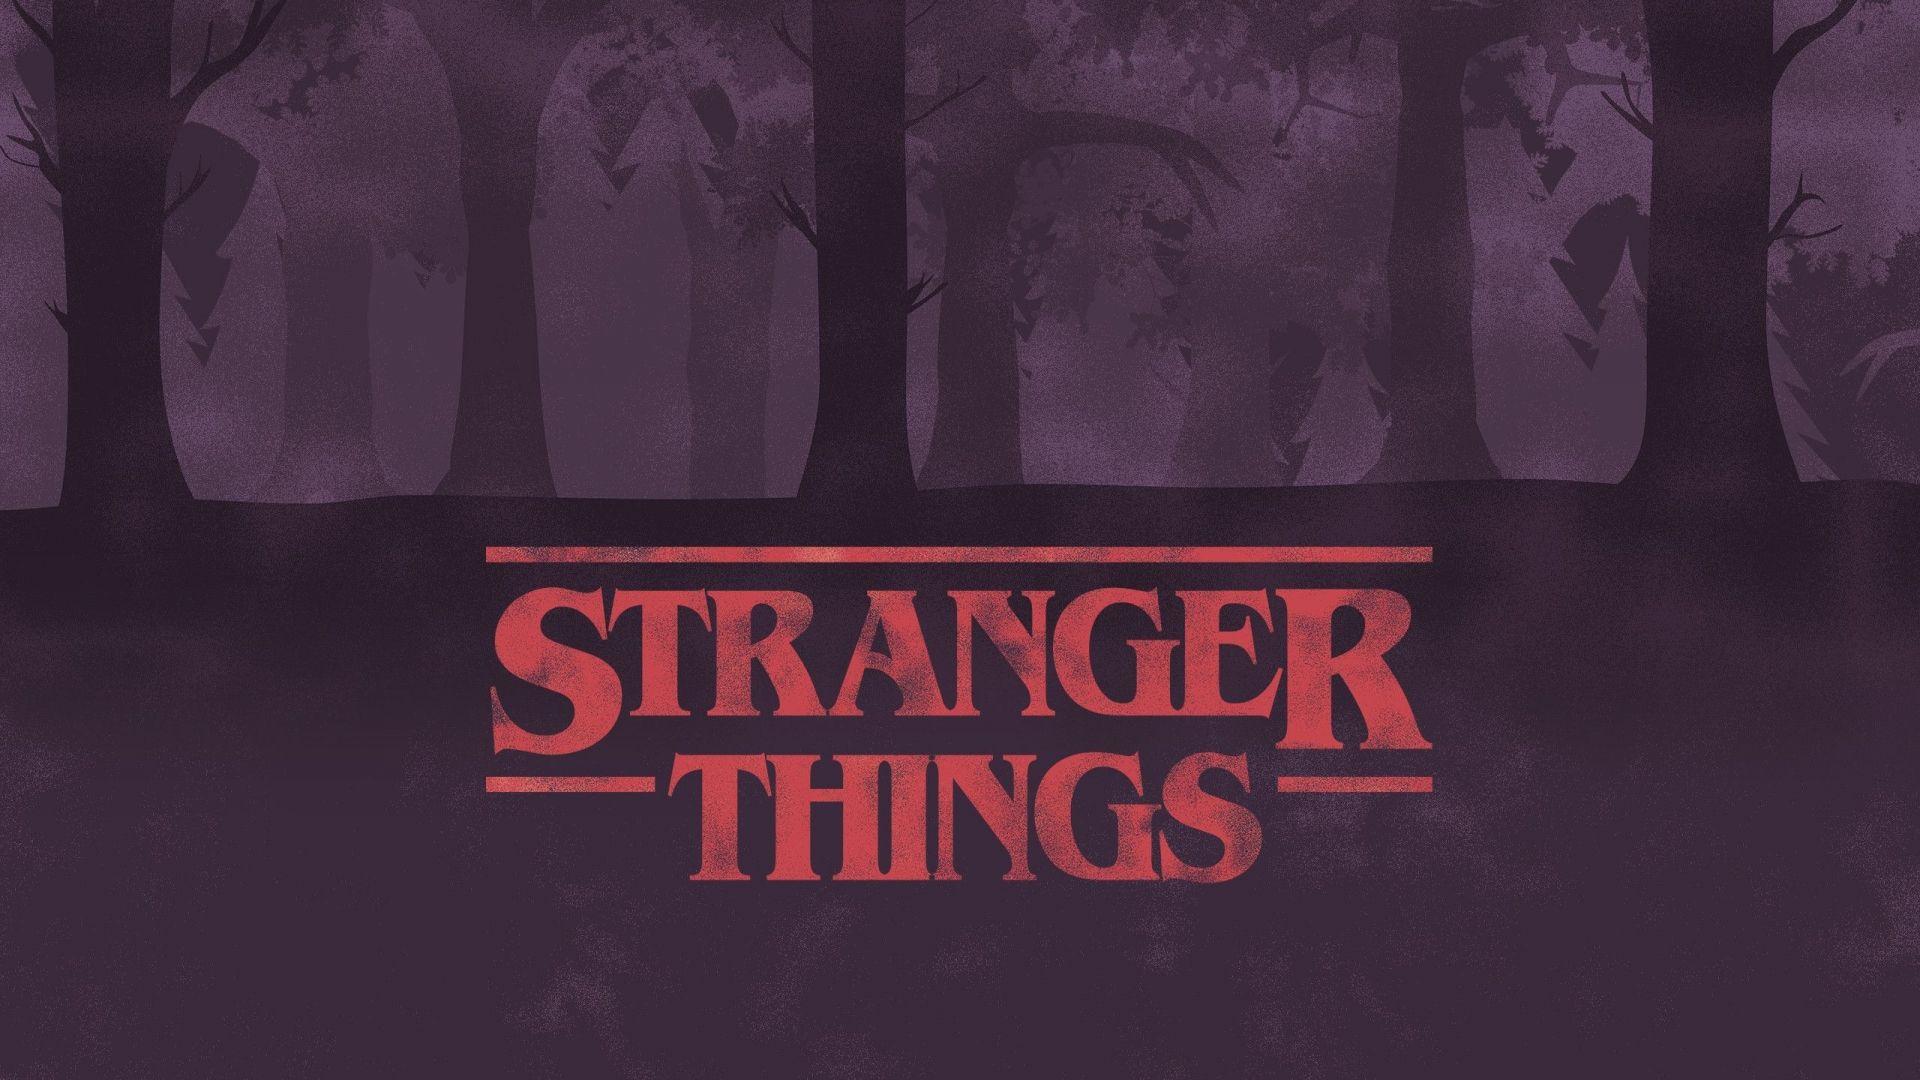 Stranger Things 4 HD Wallpapers Free download  PixelsTalkNet